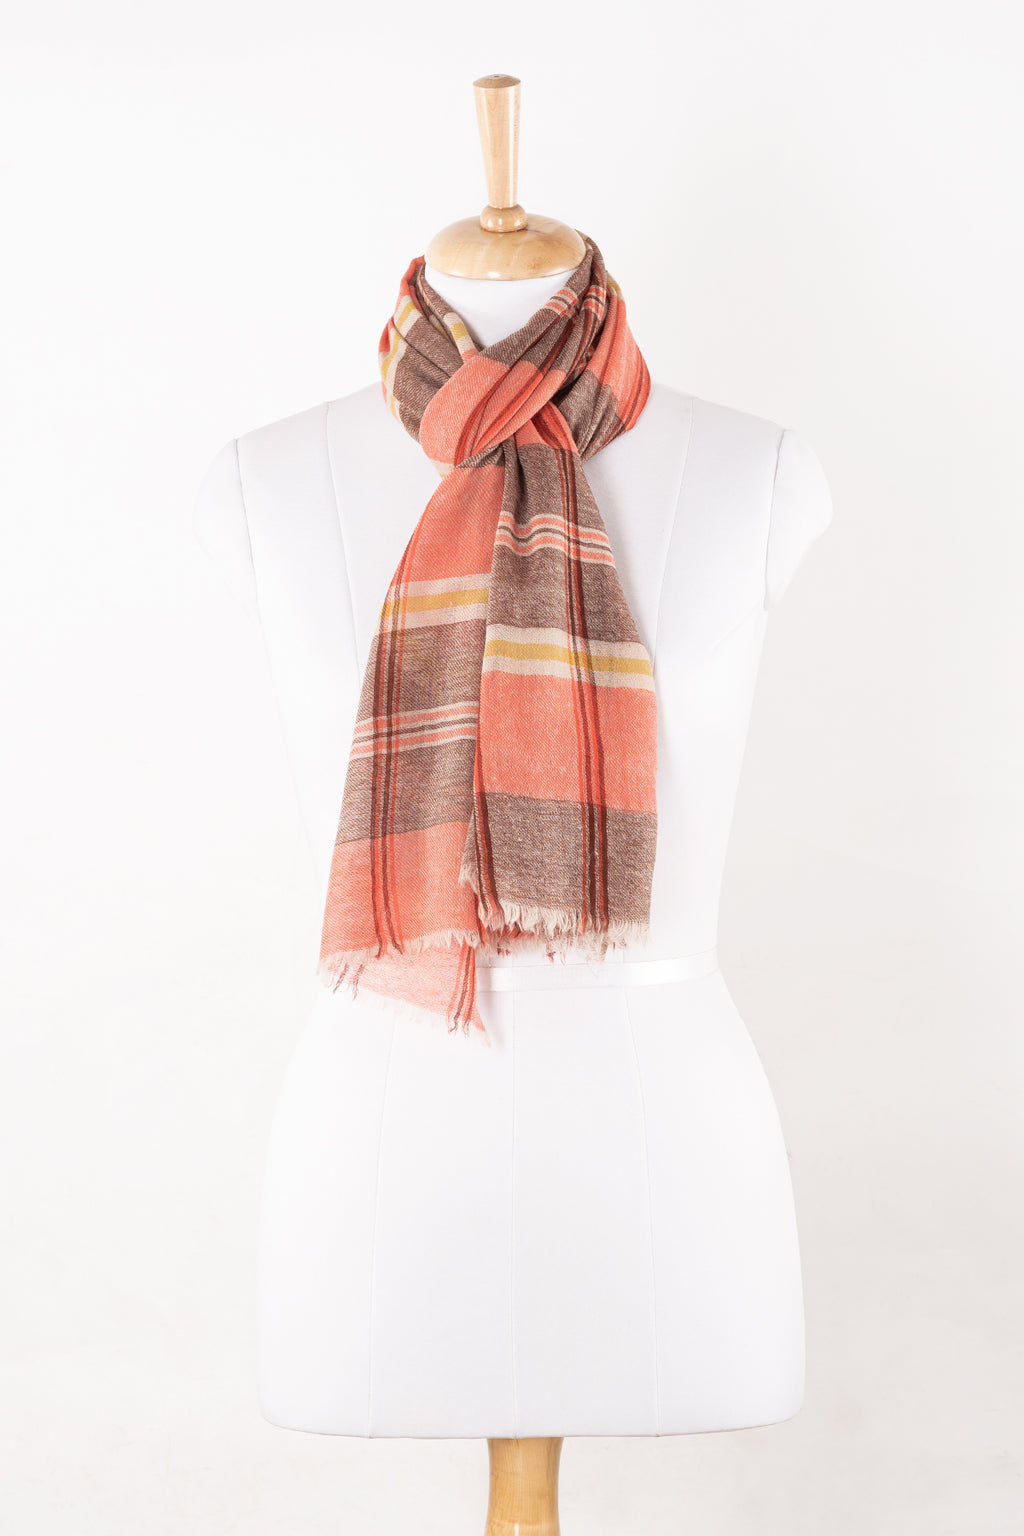 SVEZE Yarn Dyed Checks and Stripes Merino Wool Scarf - Pink Brown - Regular Drape